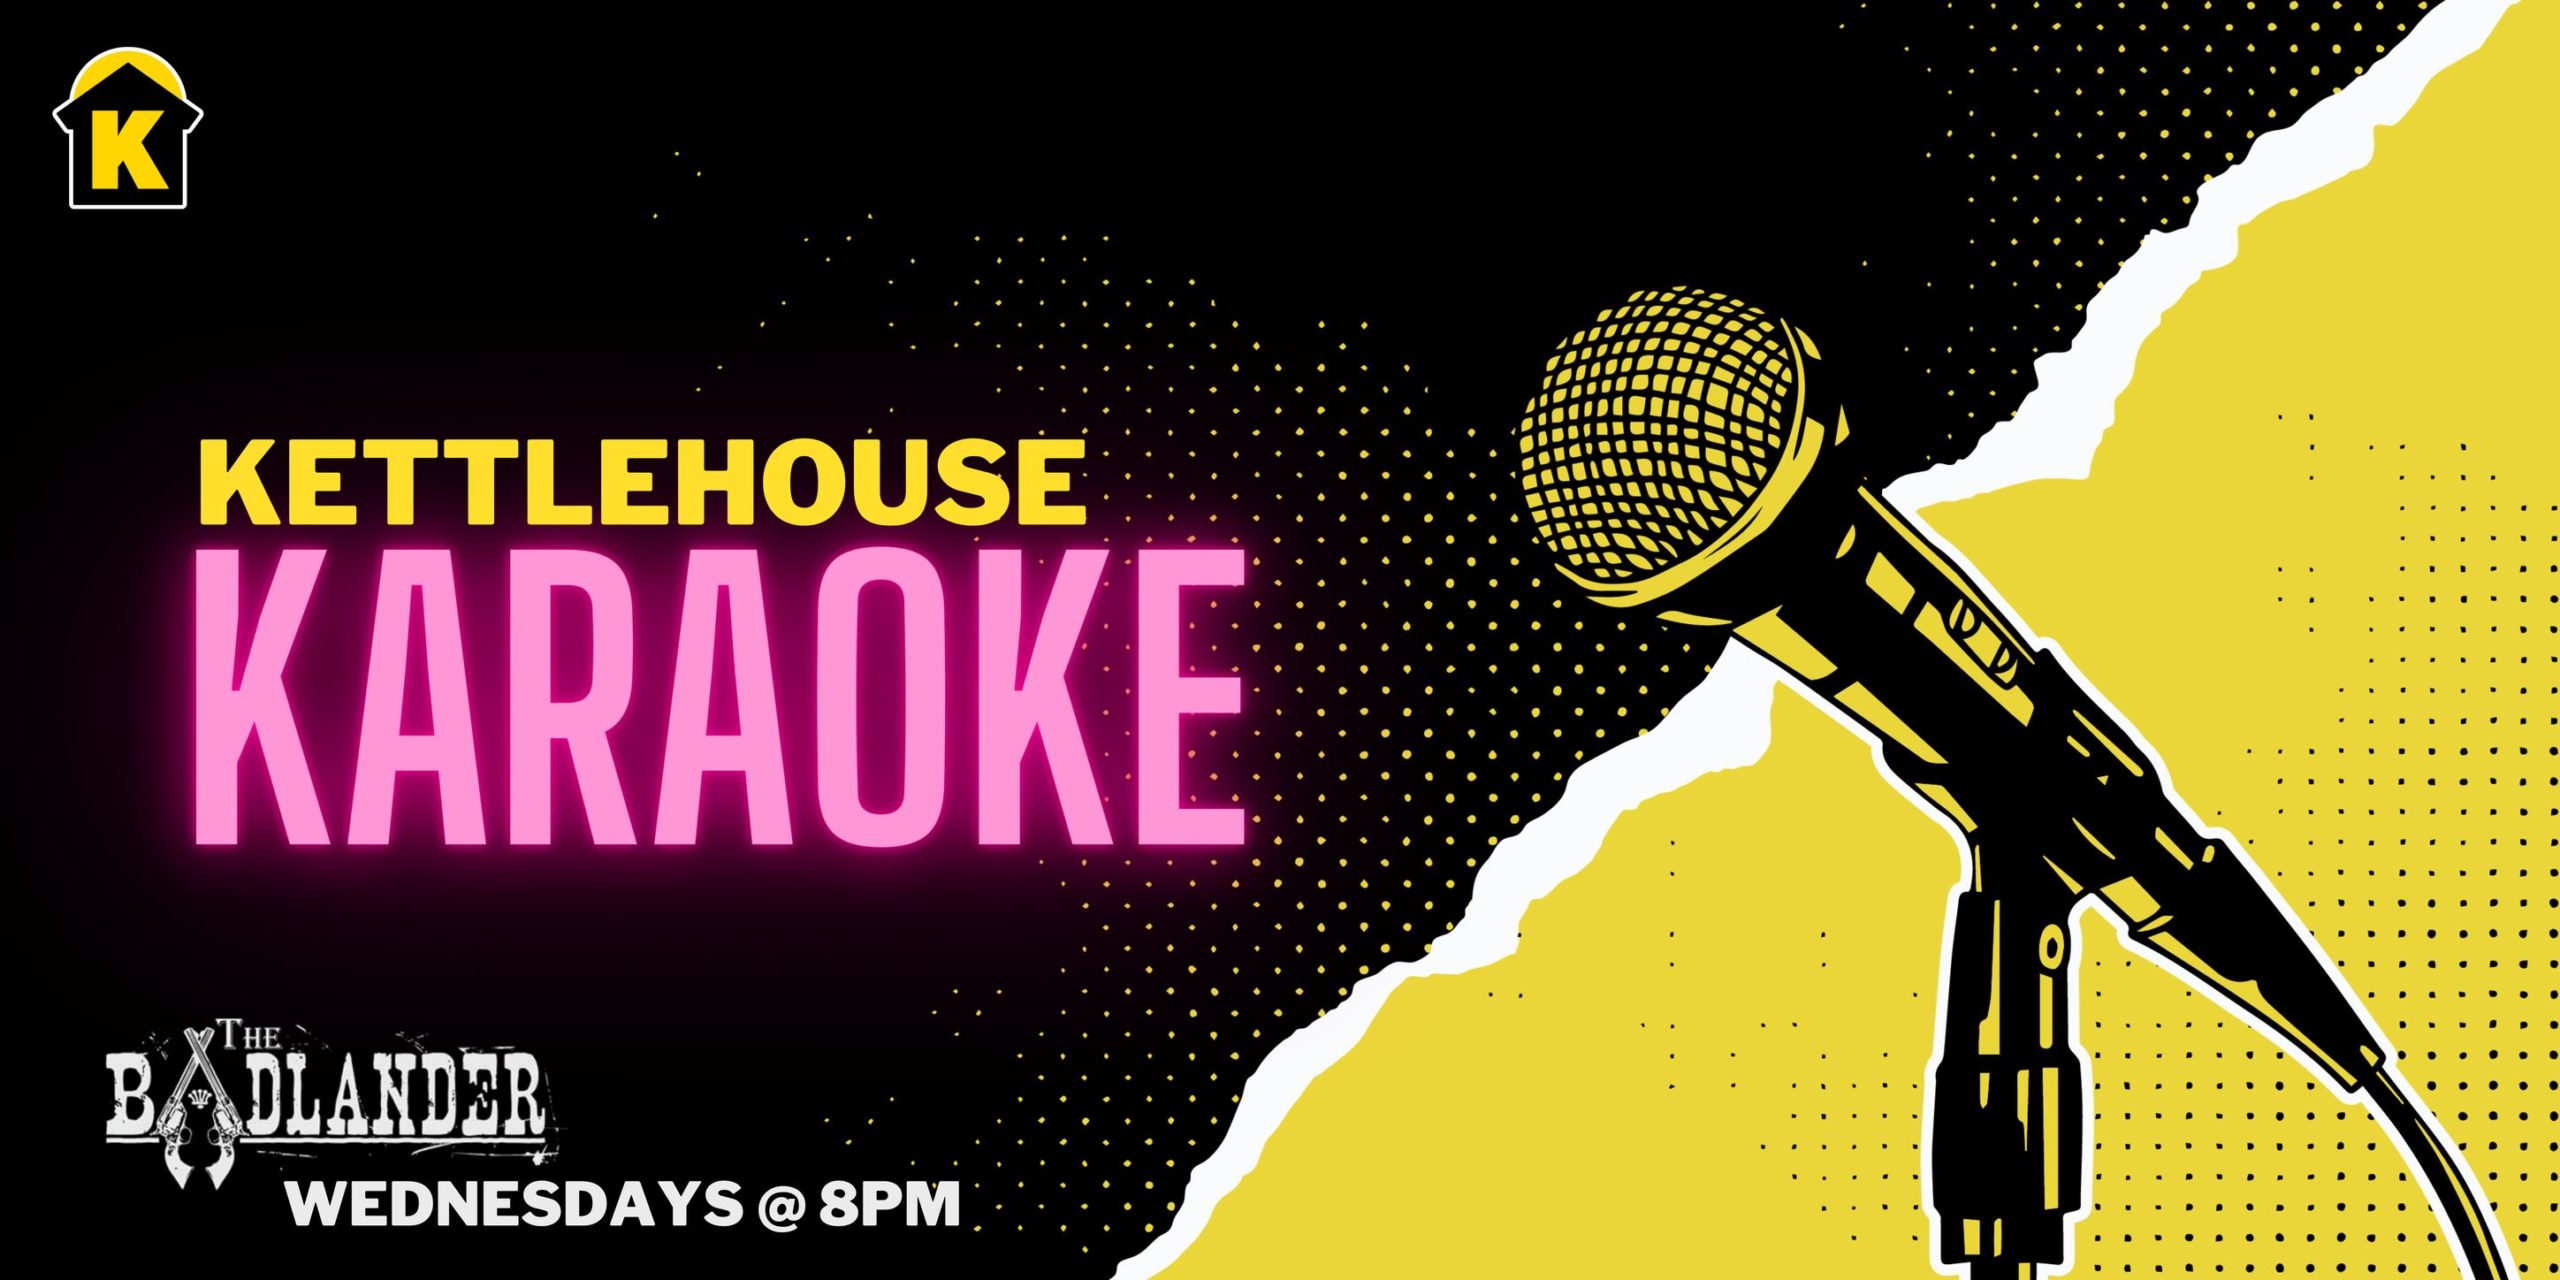 KettleHouse Karaoke Wednesdays at The Badlander in Downtown Missoula, Montana